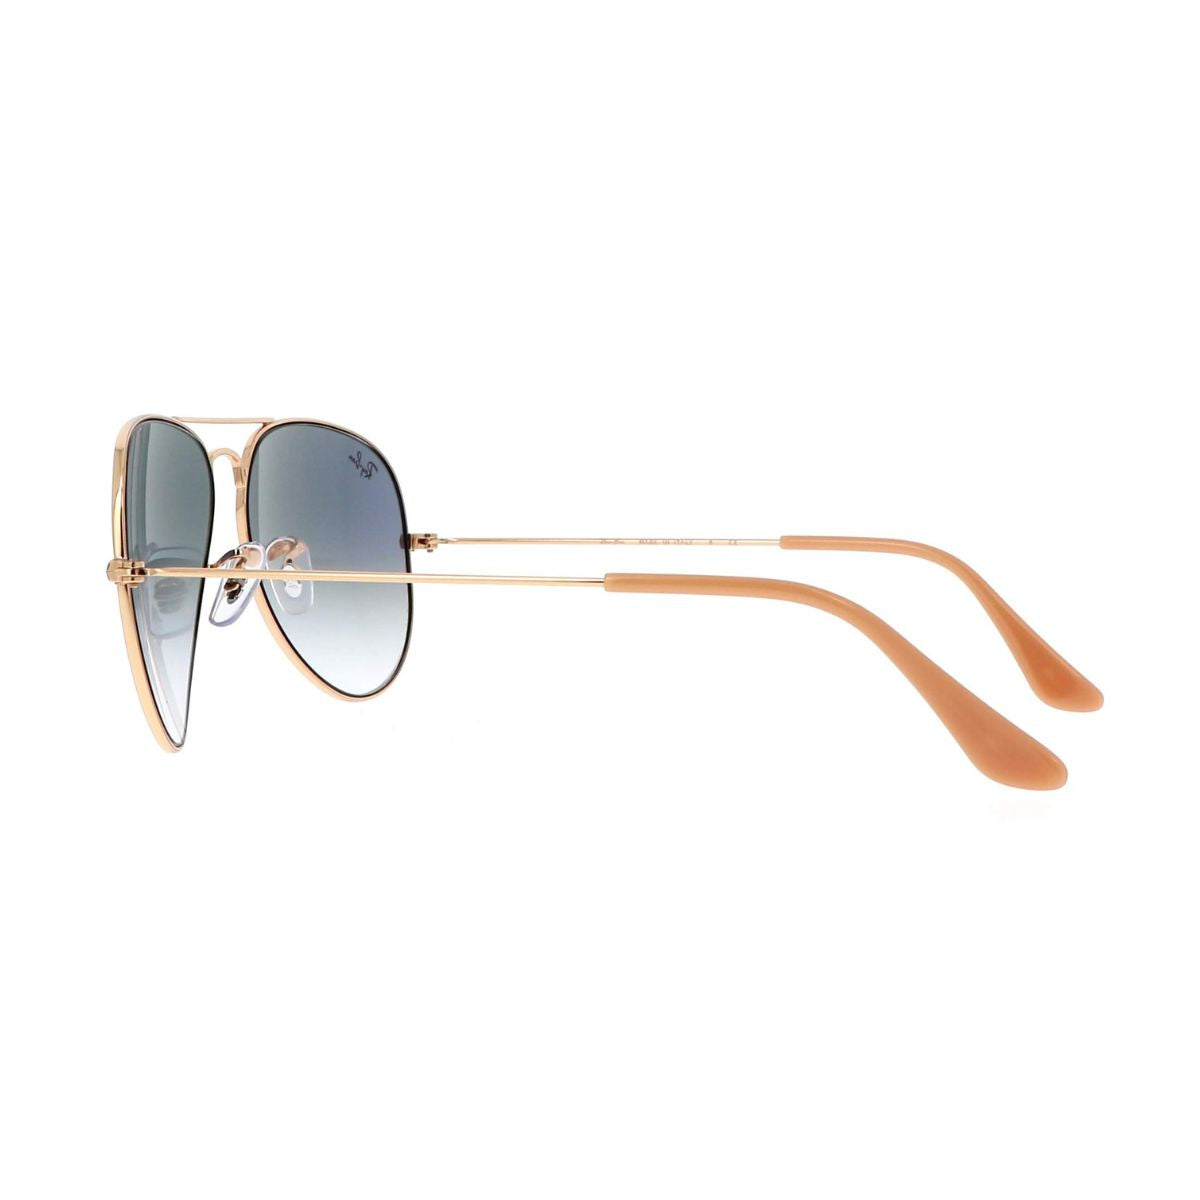 "Rayban 3025 001/3F Aviator Eyewear Sunglasses For Men's At Optorium""